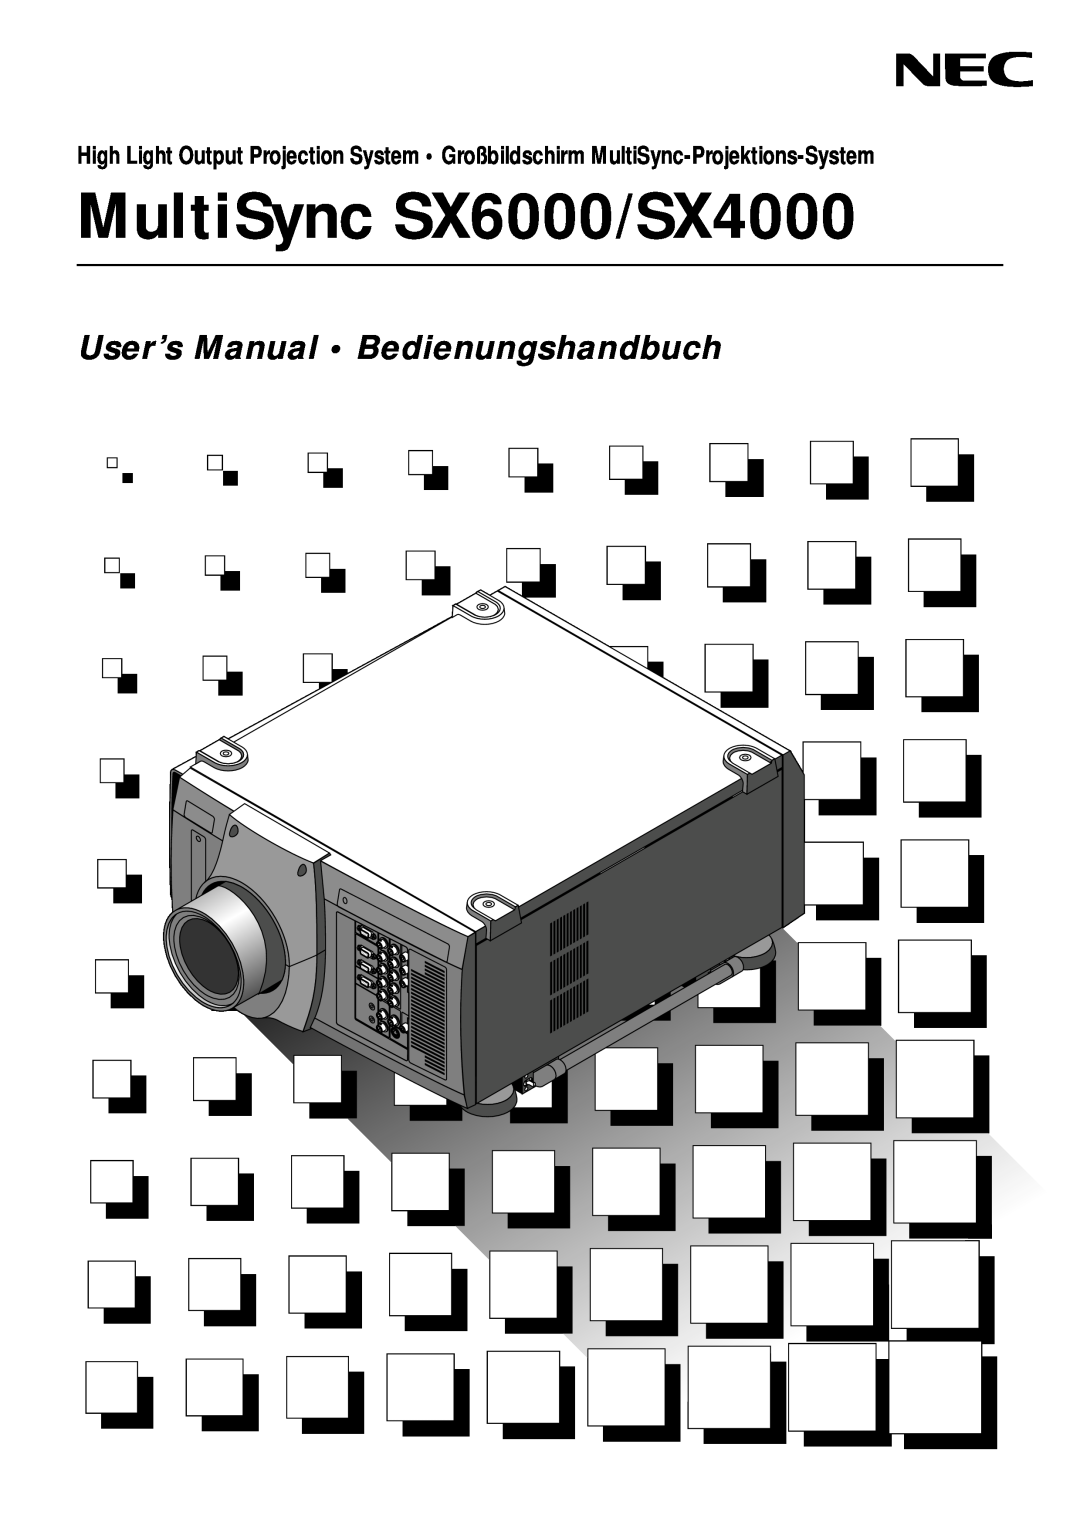 NEC user manual MultiSync SX6000/SX4000, User’s Manual Bedienungshandbuch 